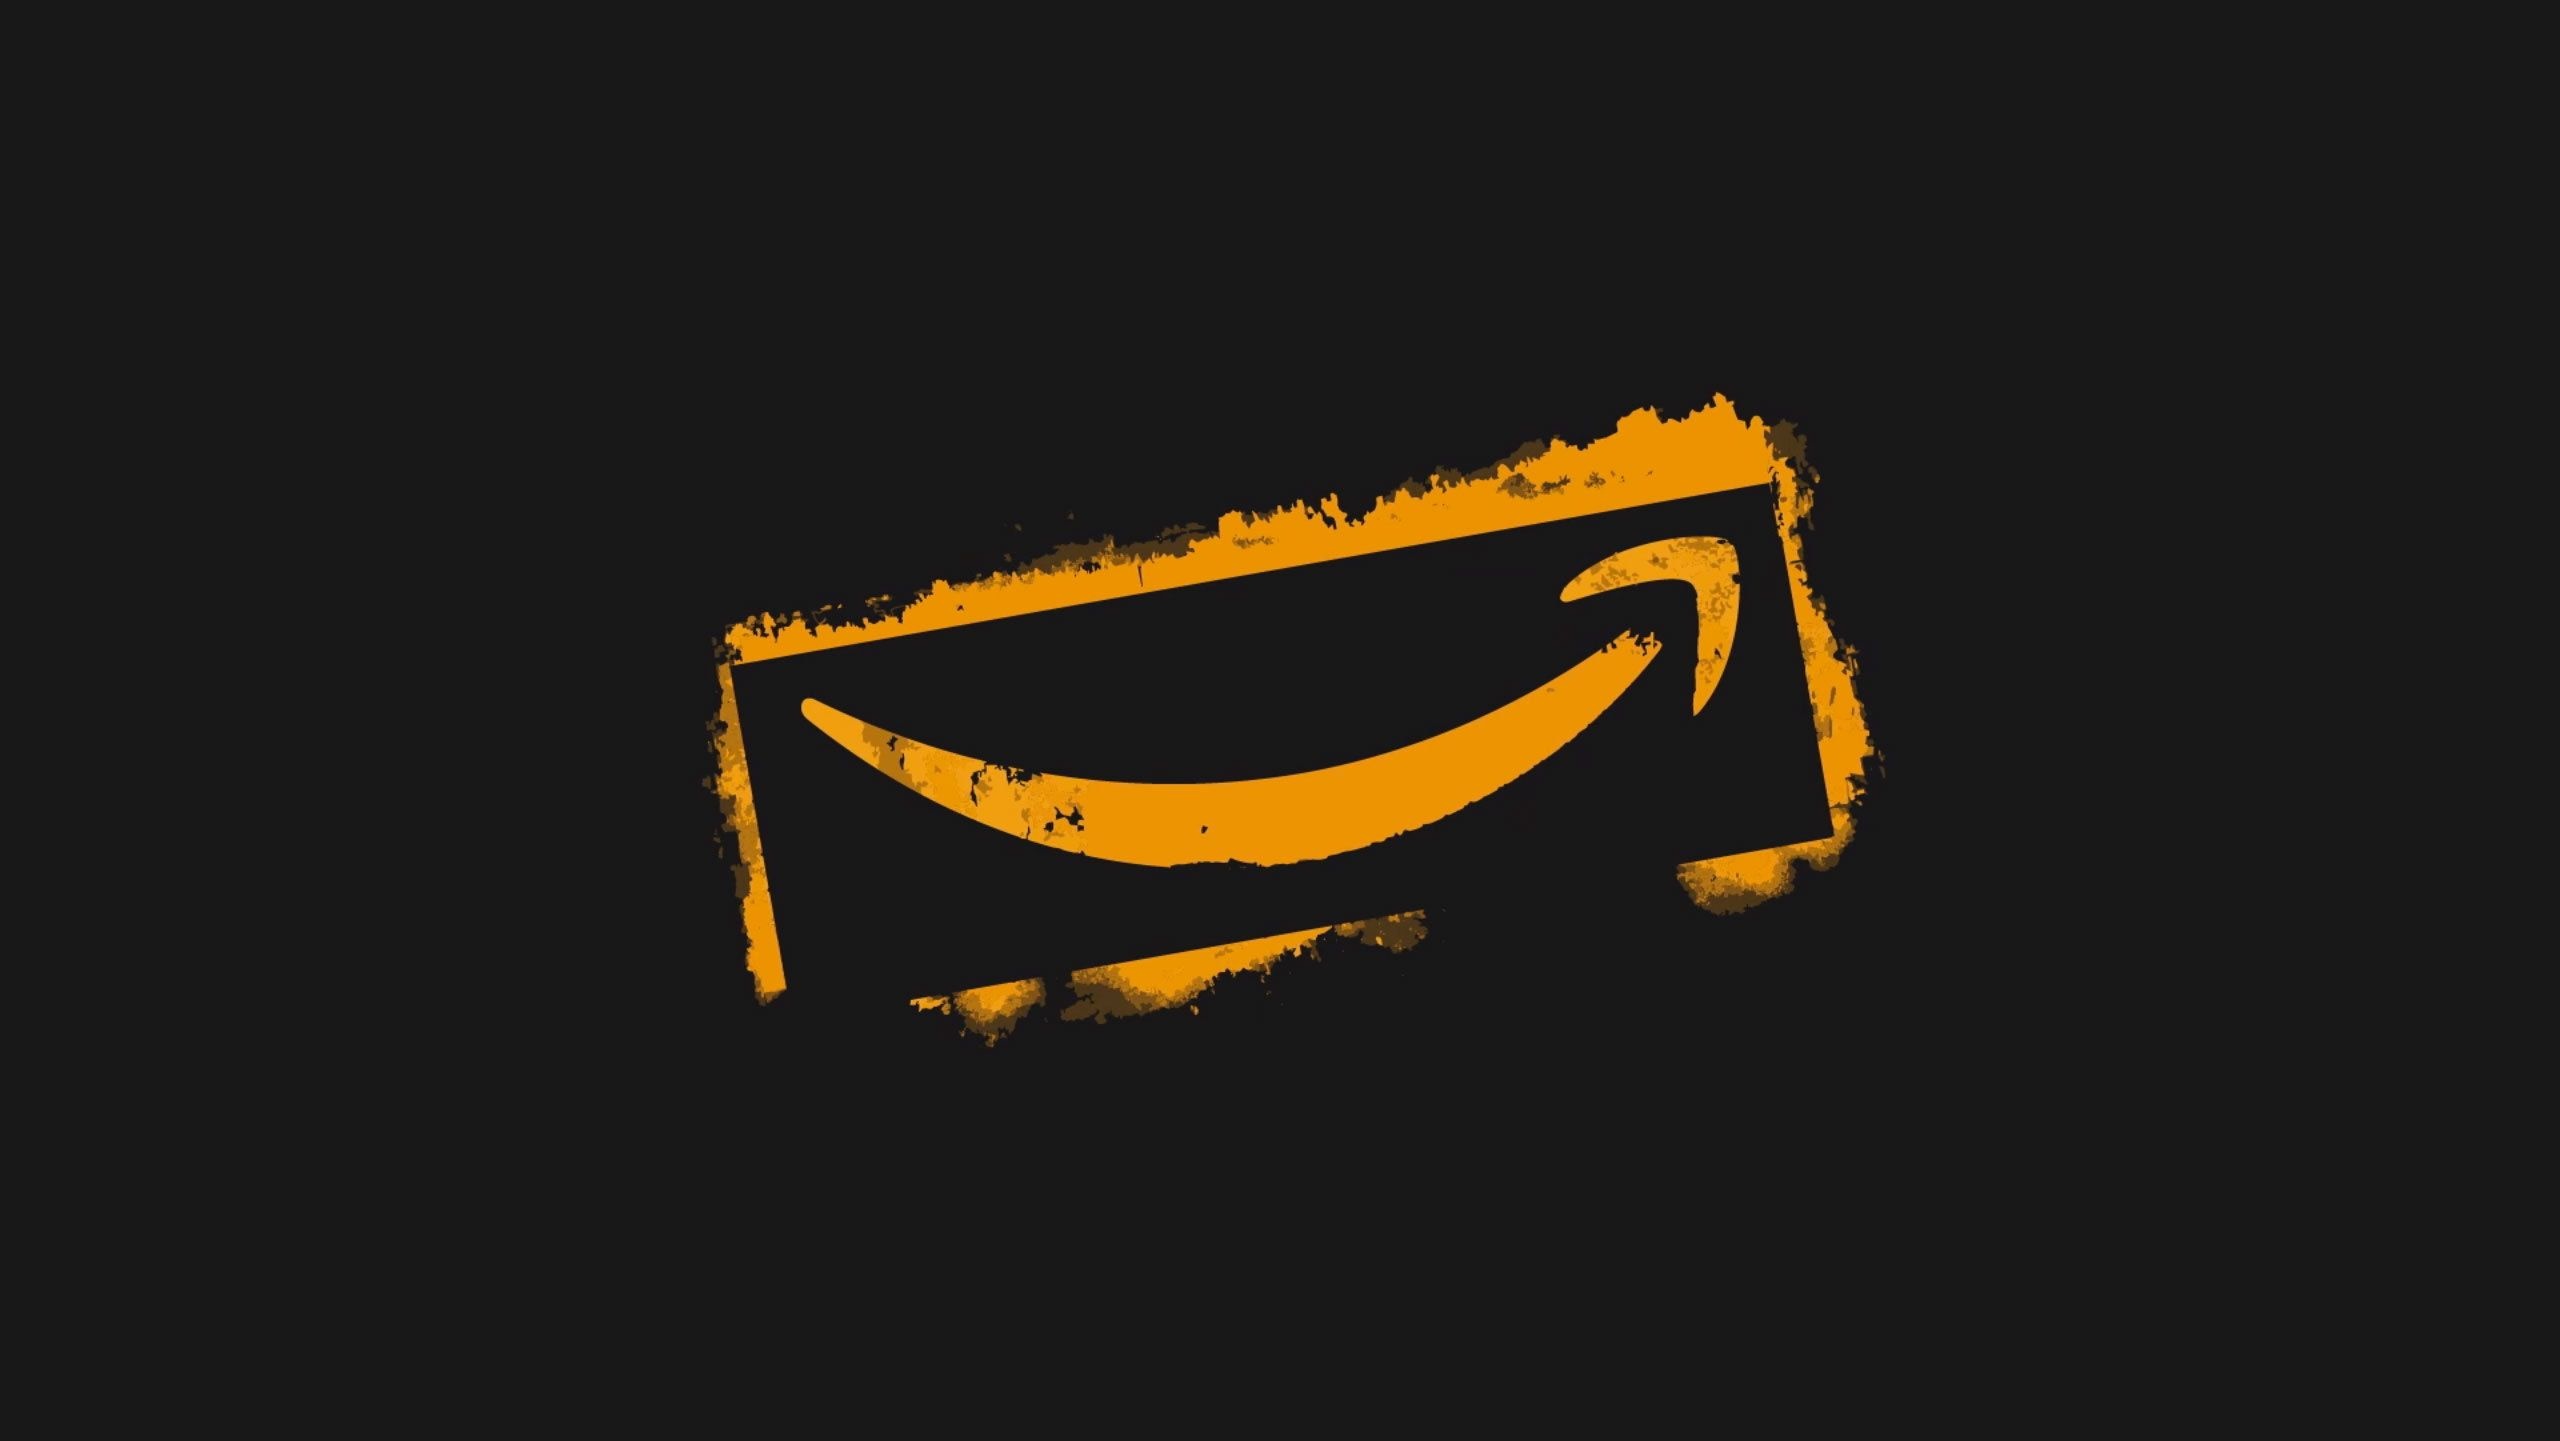 Amazon: Minimalism, Logo, Black and yellow, Digital distribution, Online-supermarket. 2560x1450 HD Wallpaper.